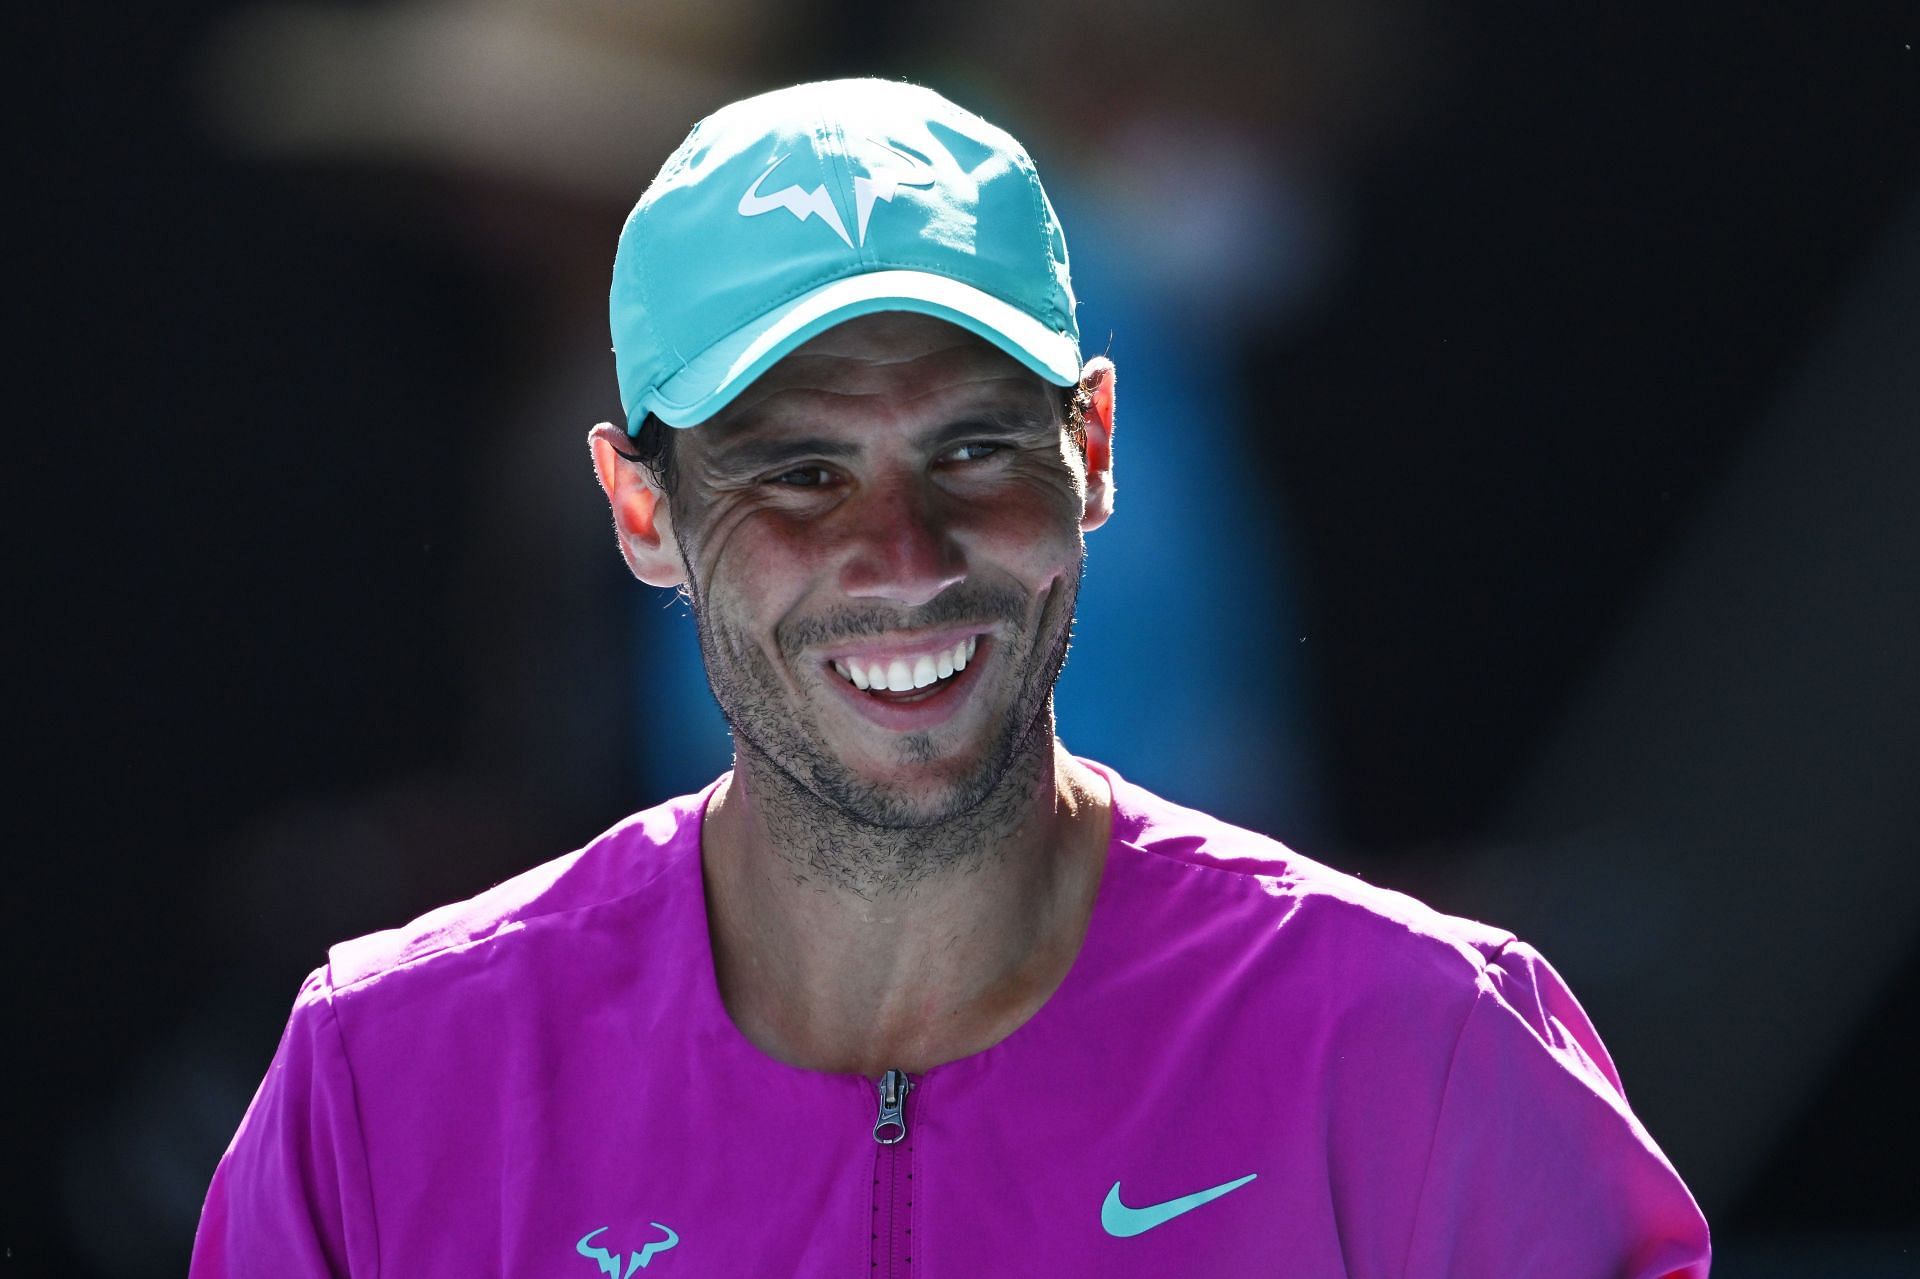 Rafael Nadal has had a great run at the 2022 Australian Open 